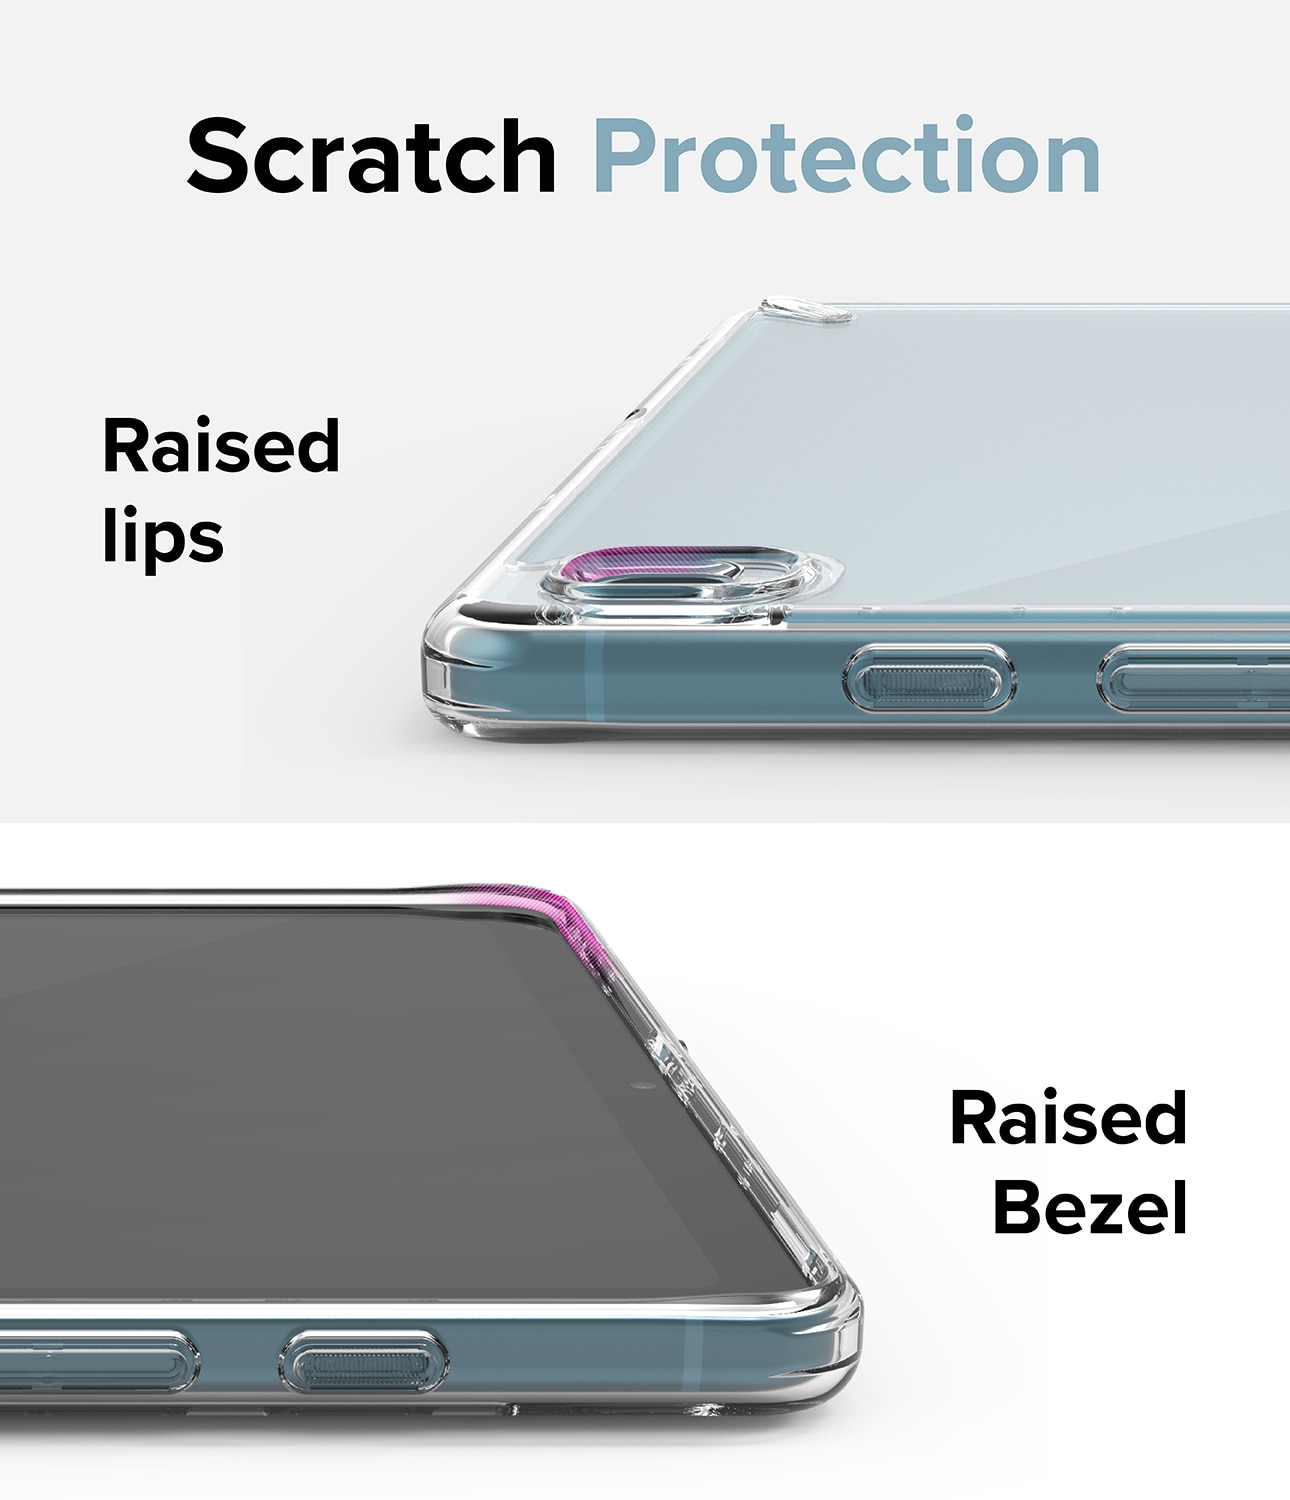 Fusion Case Samsung Galaxy Tab S6 Lite 10.4 Clear